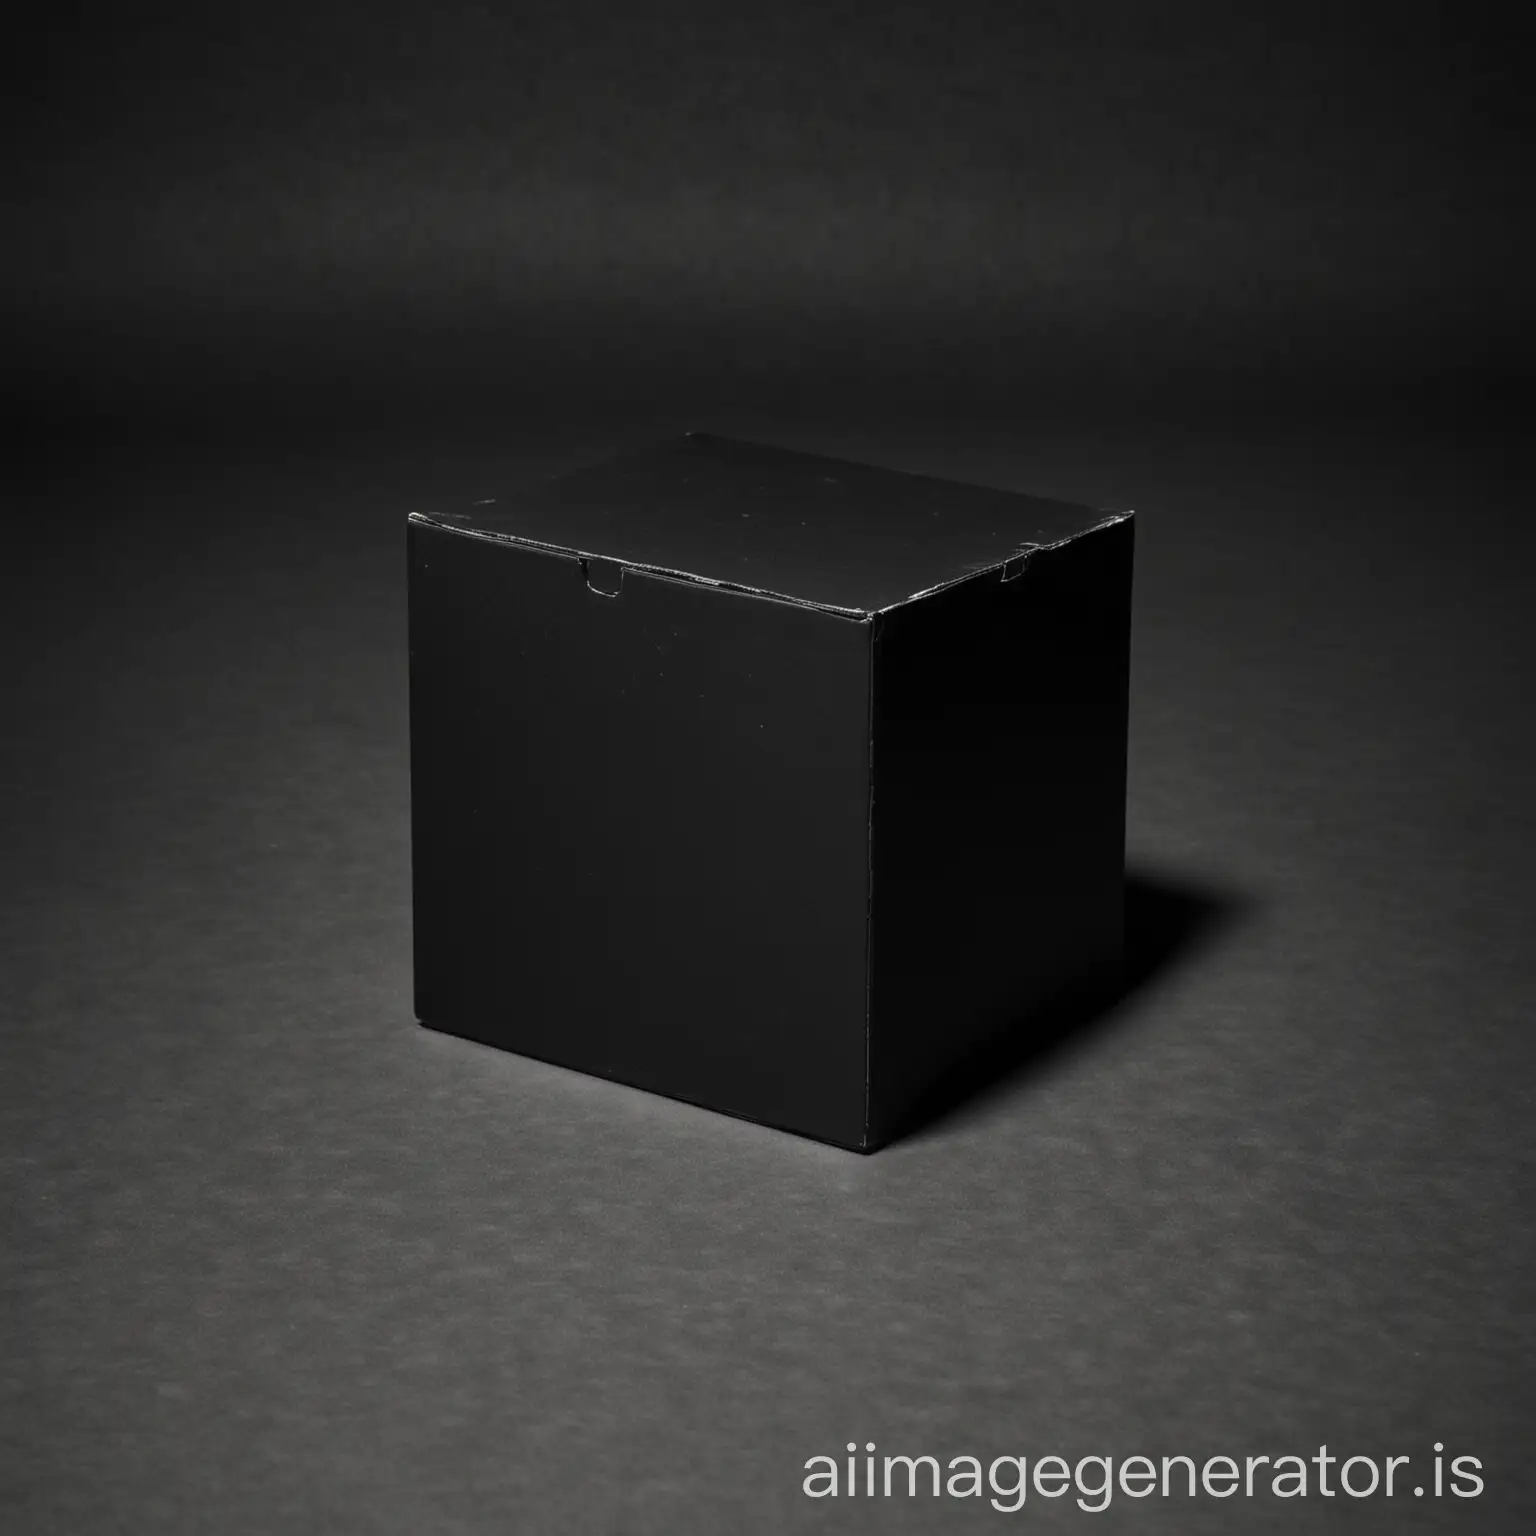 Mysterious-Black-Box